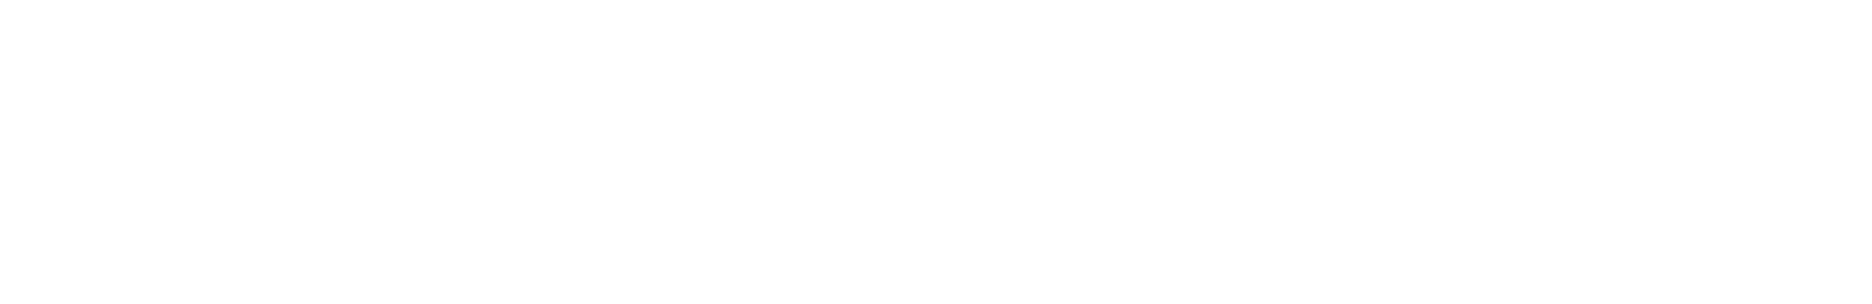 Movotti-logo